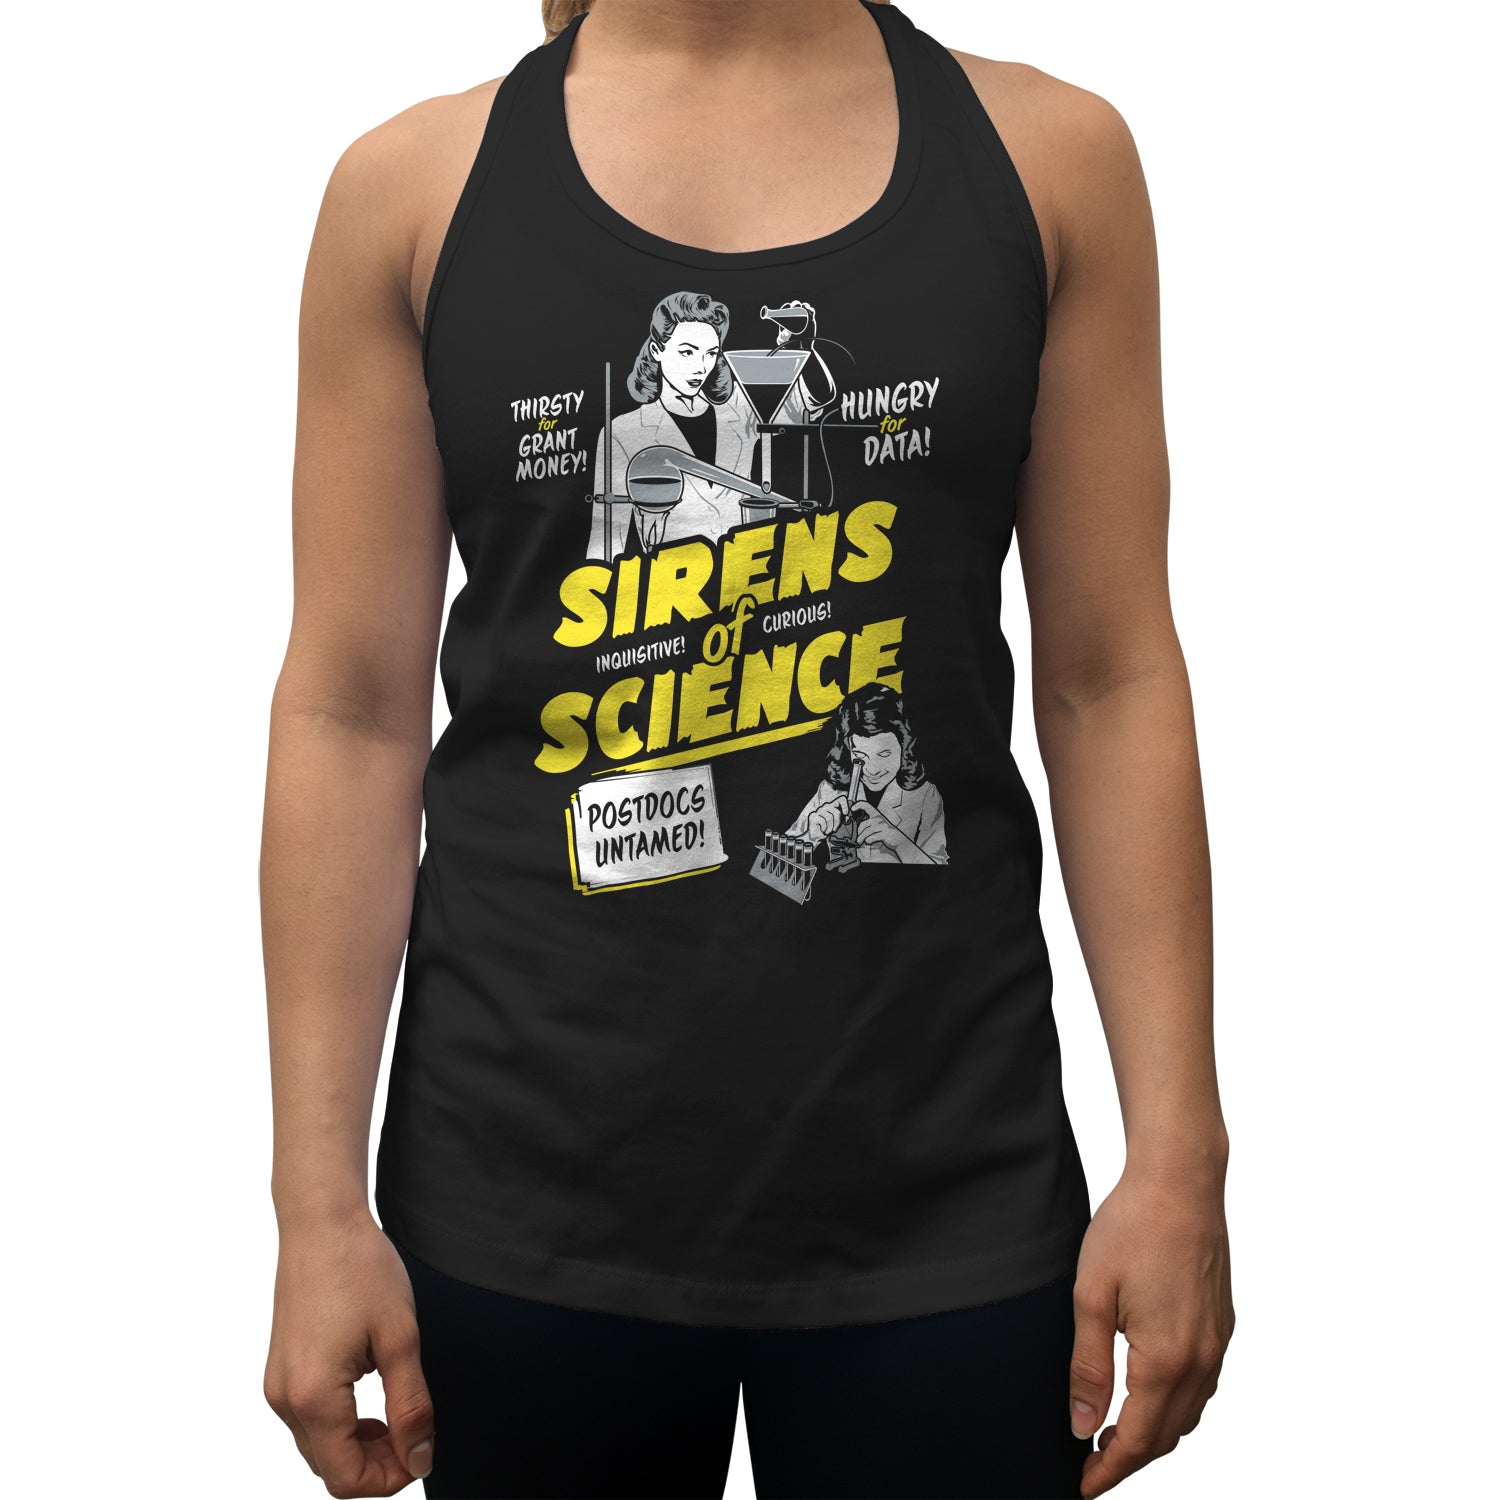 Women's Sirens of Science Racerback Tank Top